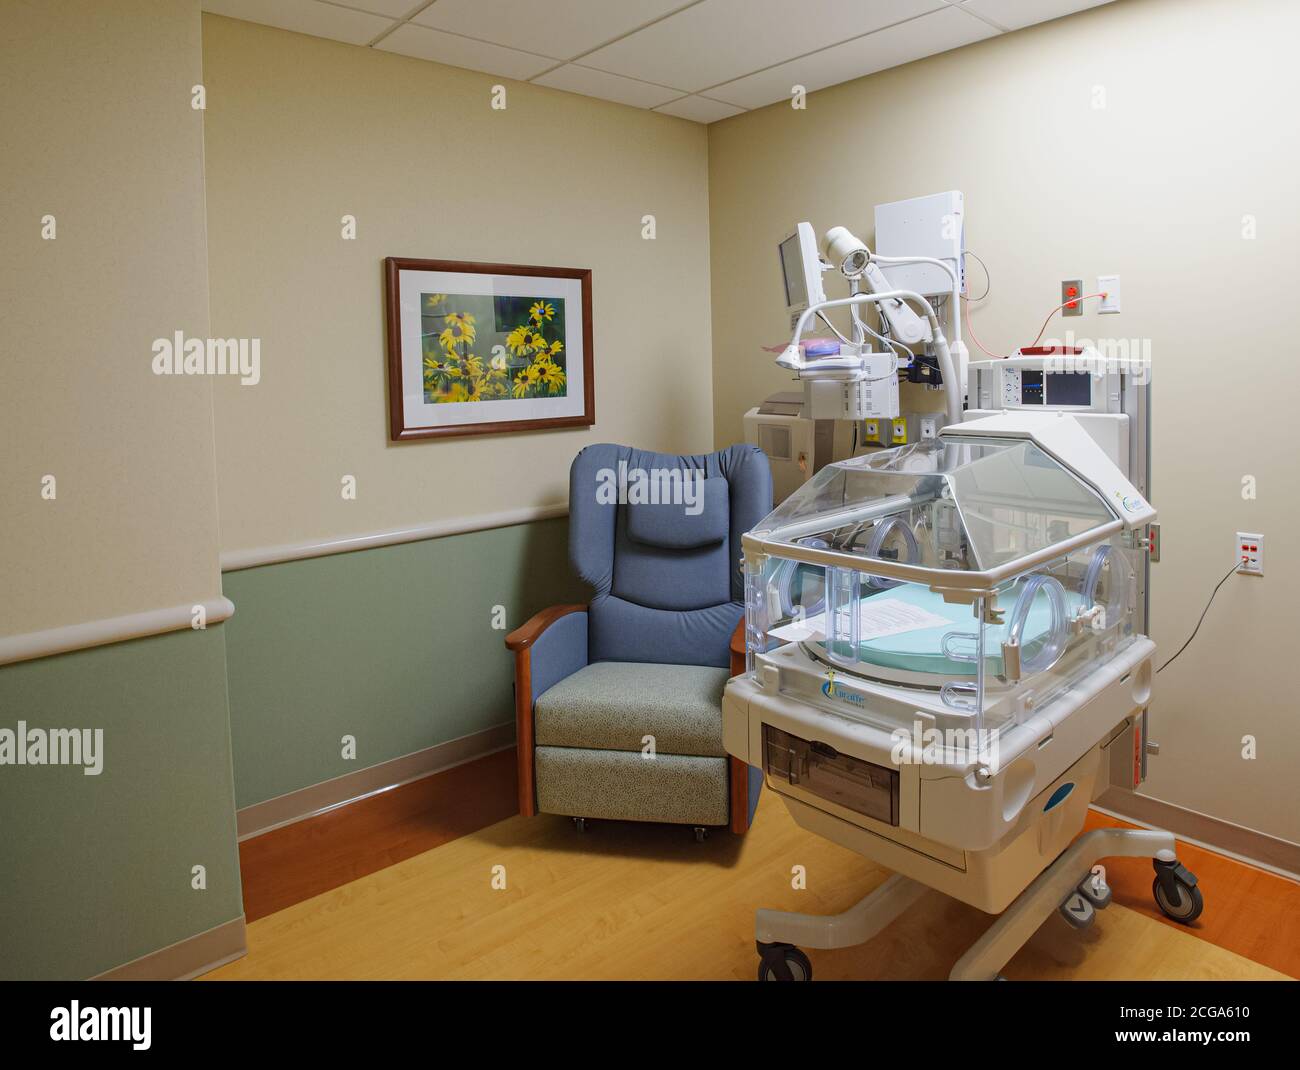 Neonatal Intensivstation als Teil des modernen Design Entbindungsflügels des Henry Ford West Bloomfield Hospital mit Natur Wand Kunst, Michigan, USA Stockfoto